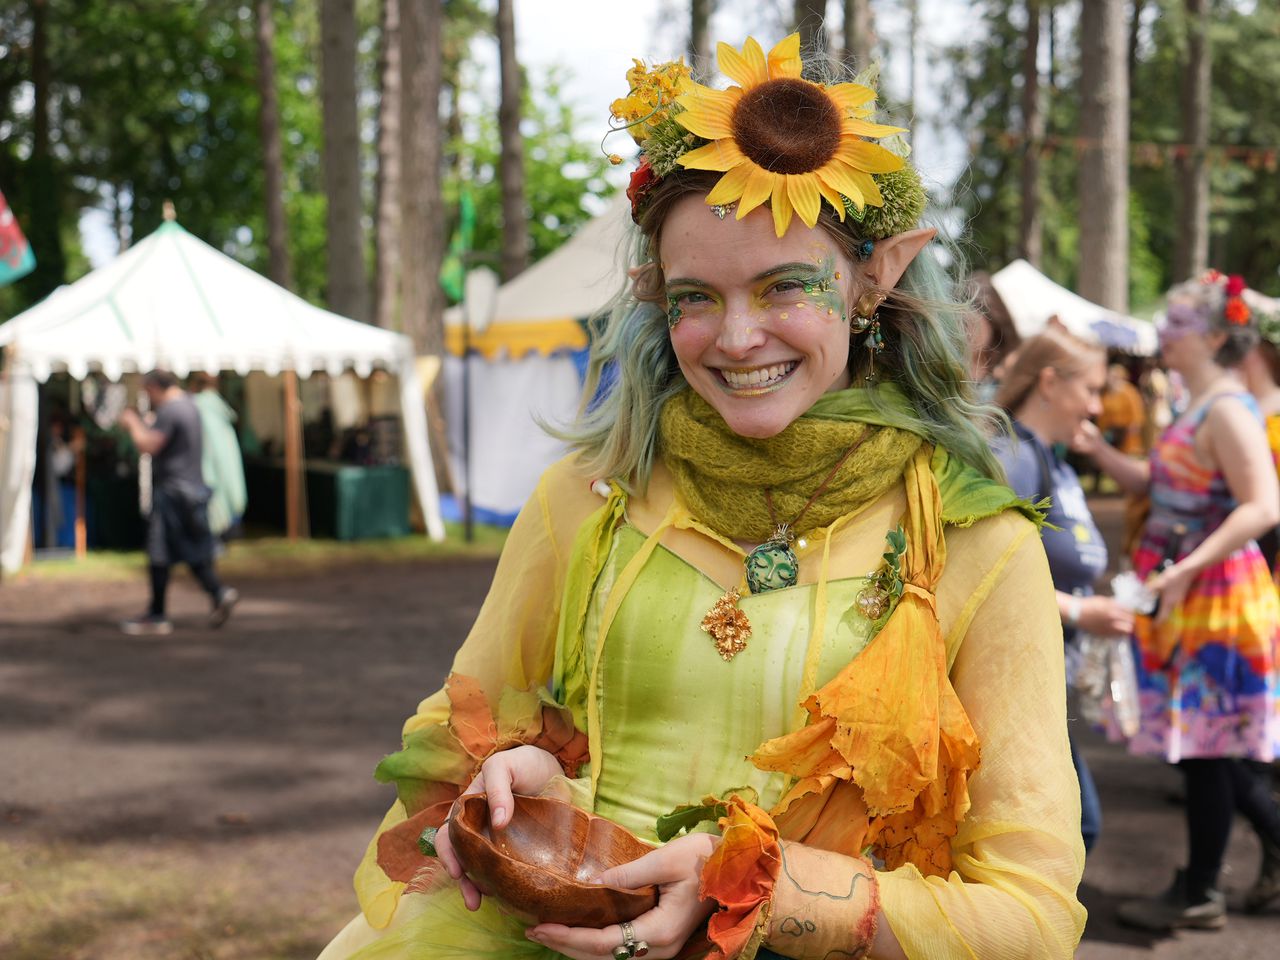 Oregon Renaissance Faire returns to Clackamas fairgrounds for two weekends of fantasy fun